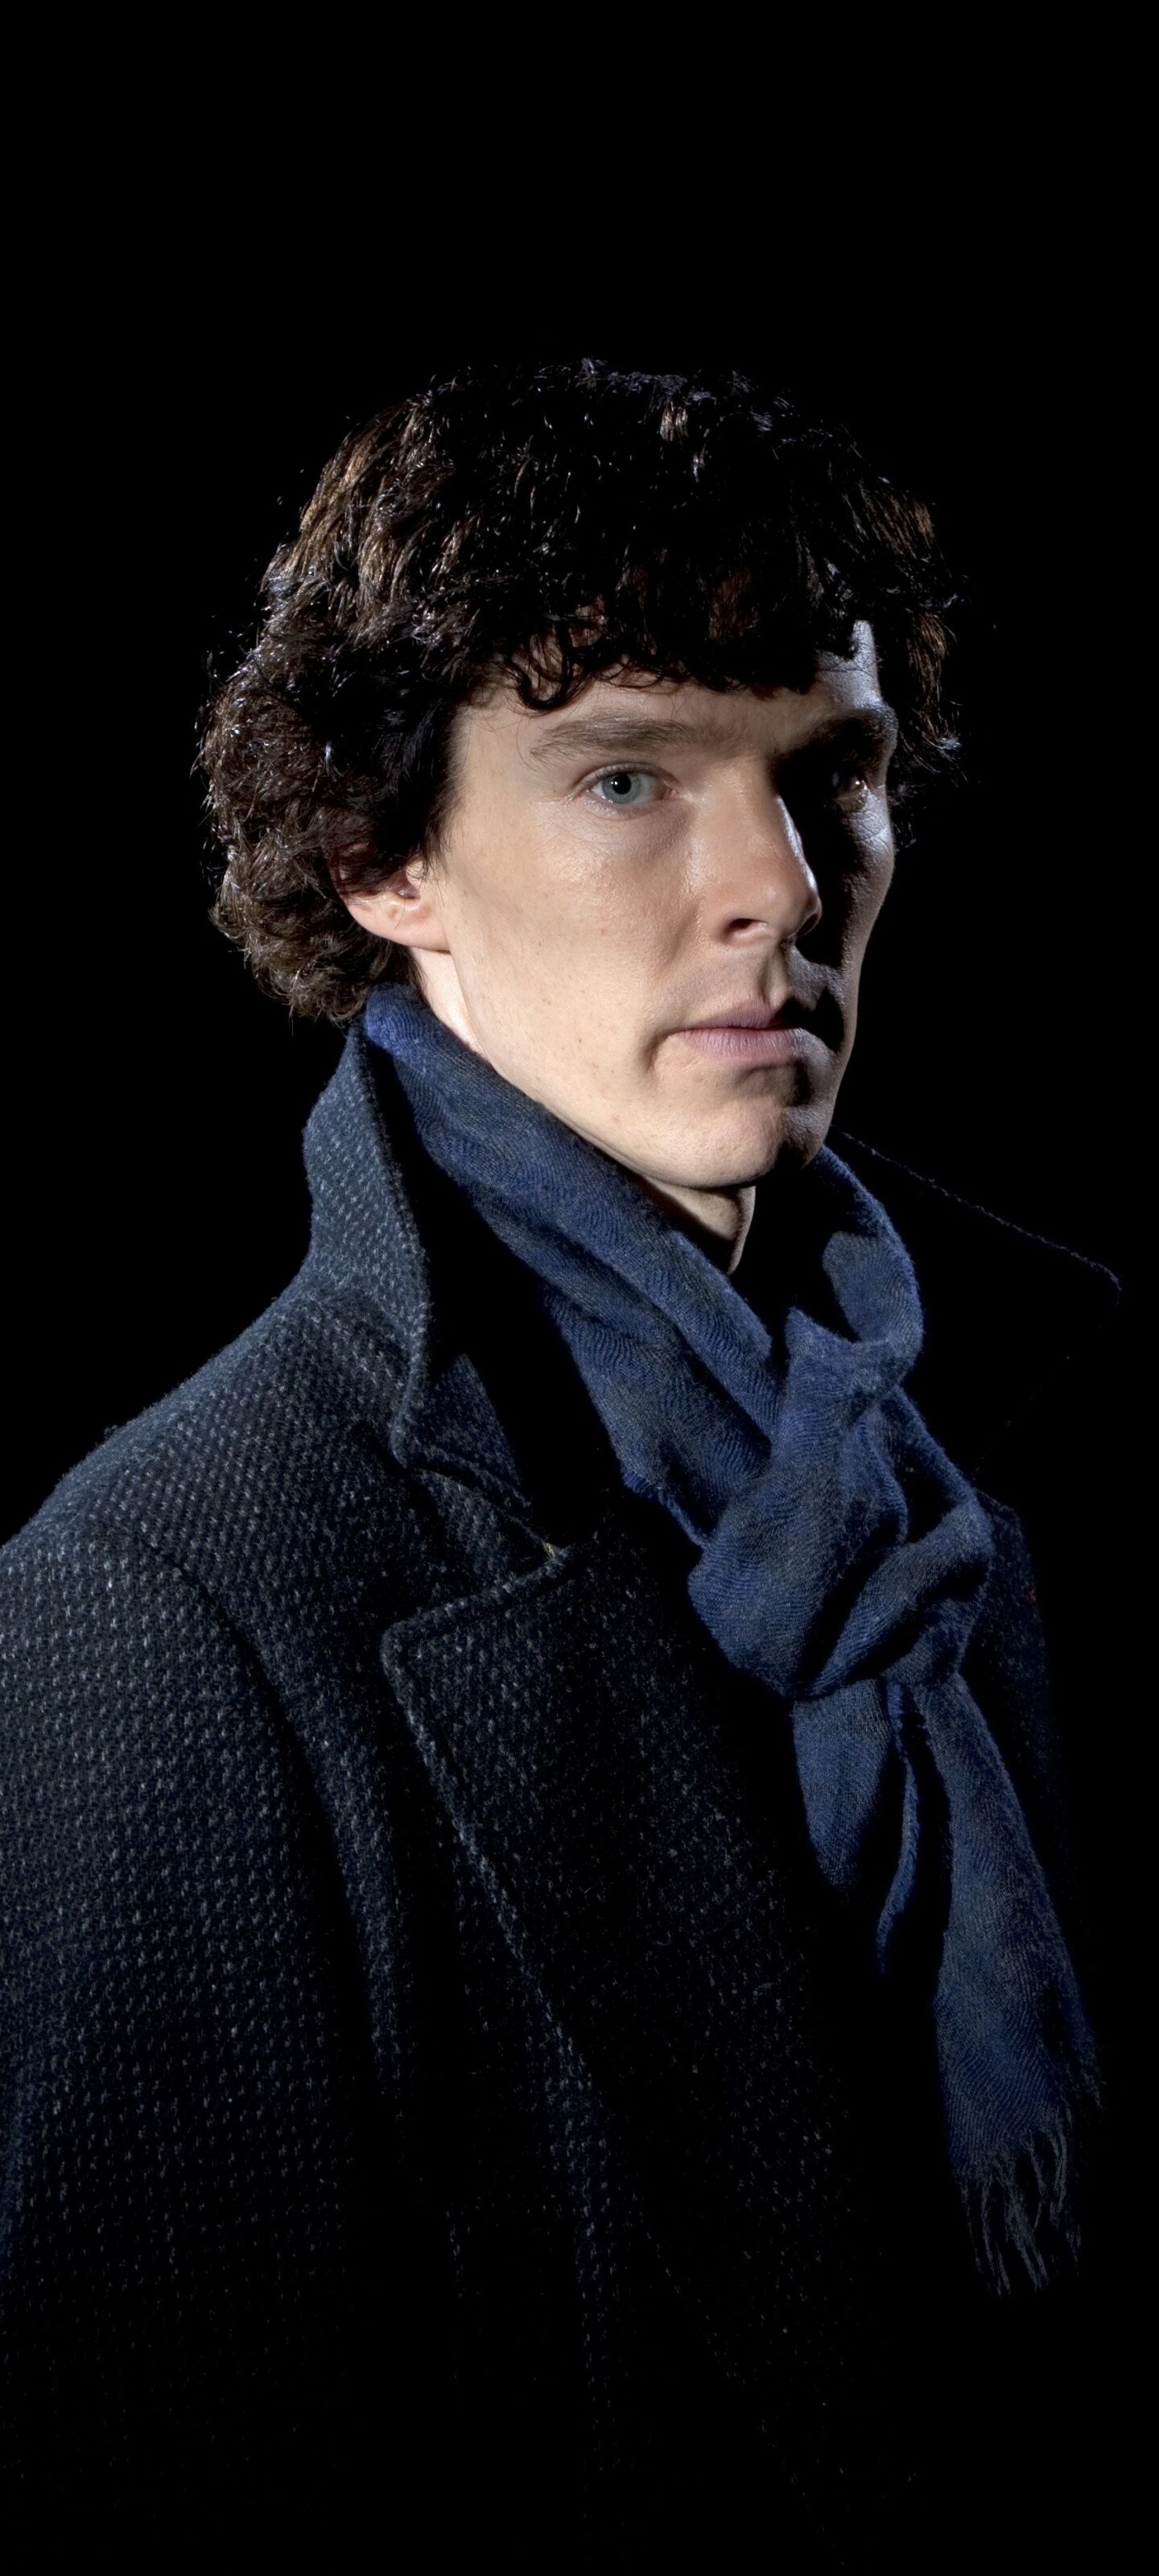 Sherlock (TV Series): "Consulting detective" Sherlock Holmes. 1440x3200 HD Background.